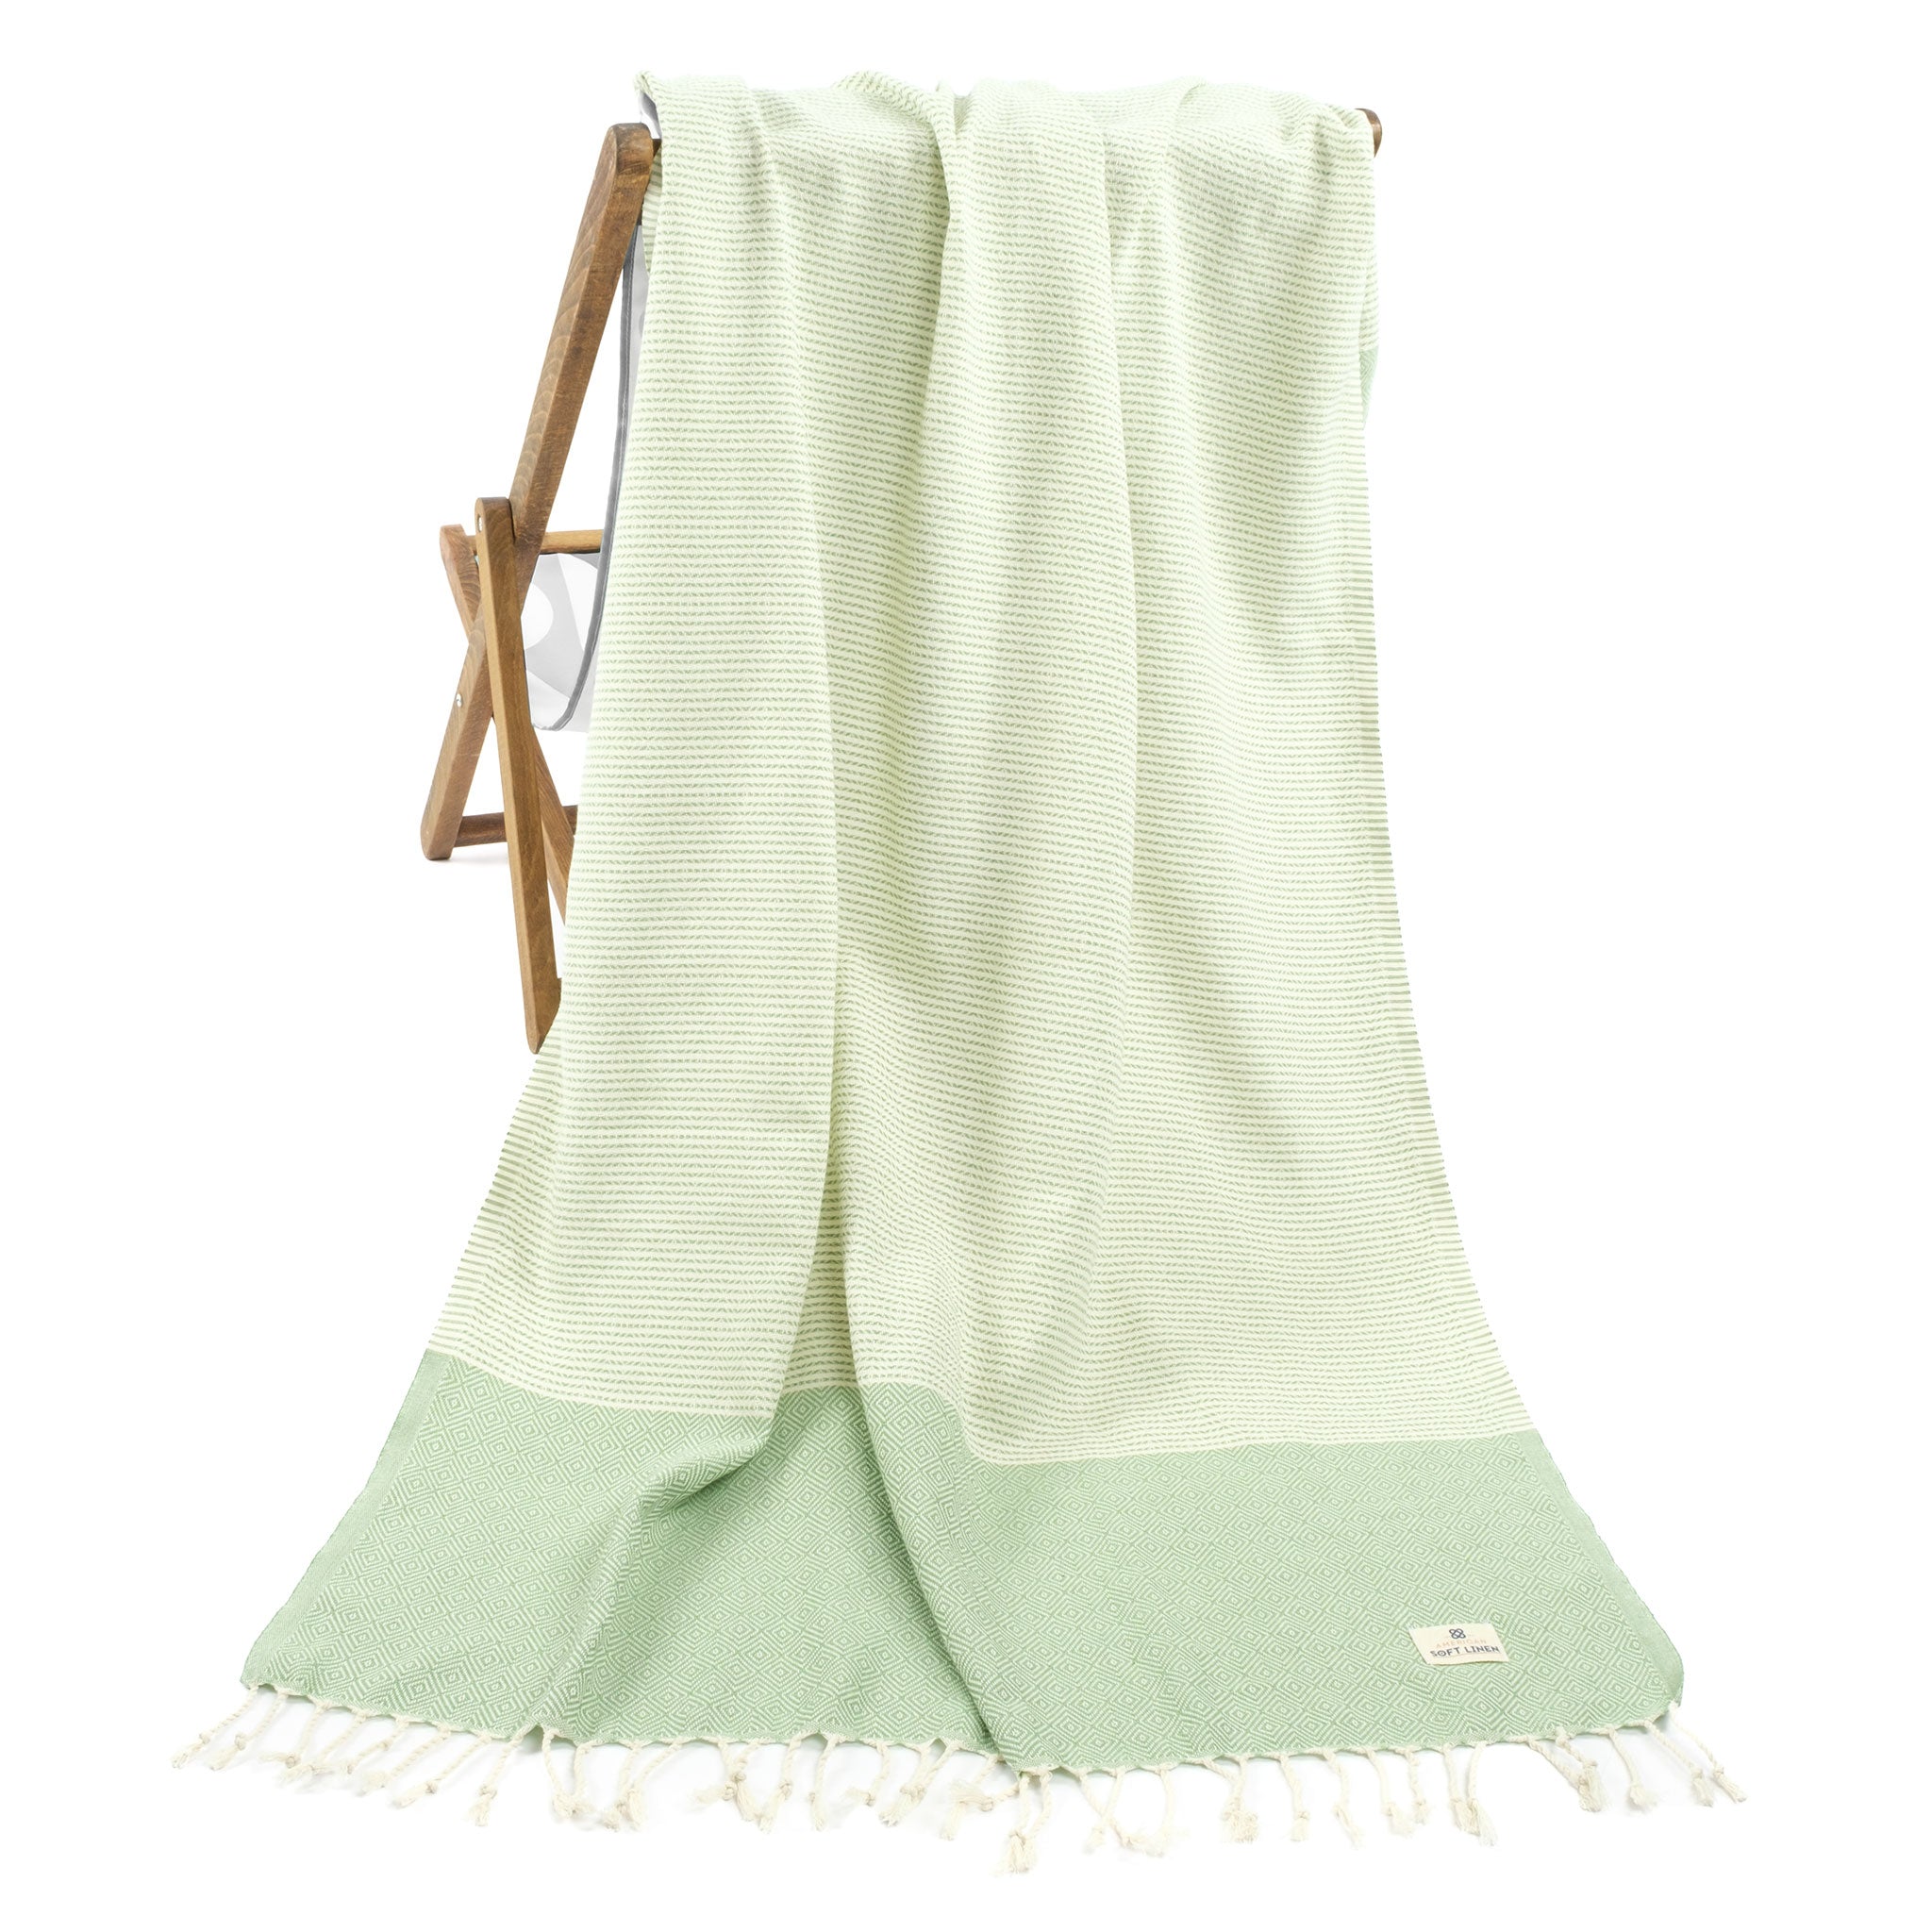 American Soft Linen - 100% Cotton Turkish Peshtemal Towels 40x70 Inches - Green - 1